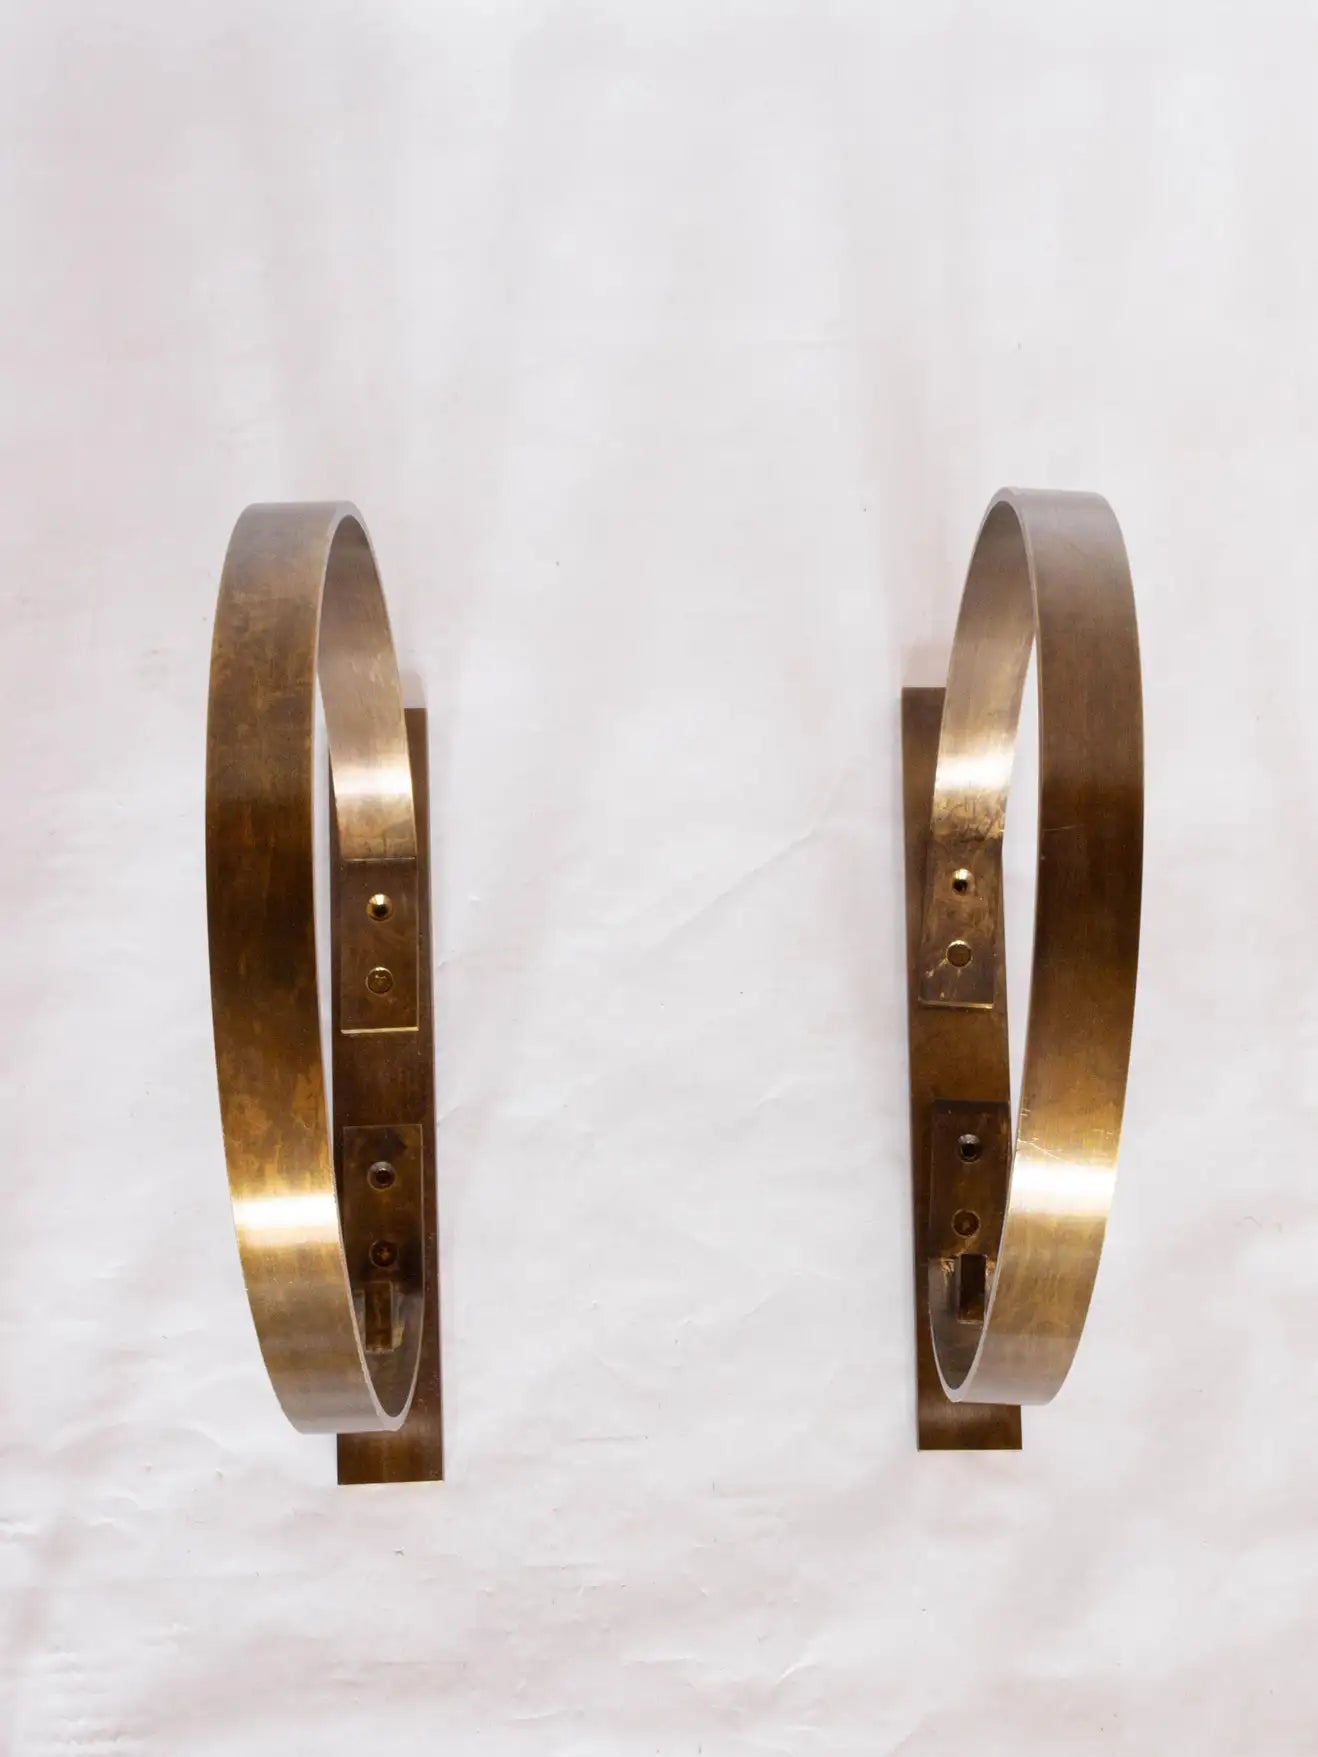 Pair of Modern Custom Circular Brass Shelf Brackets